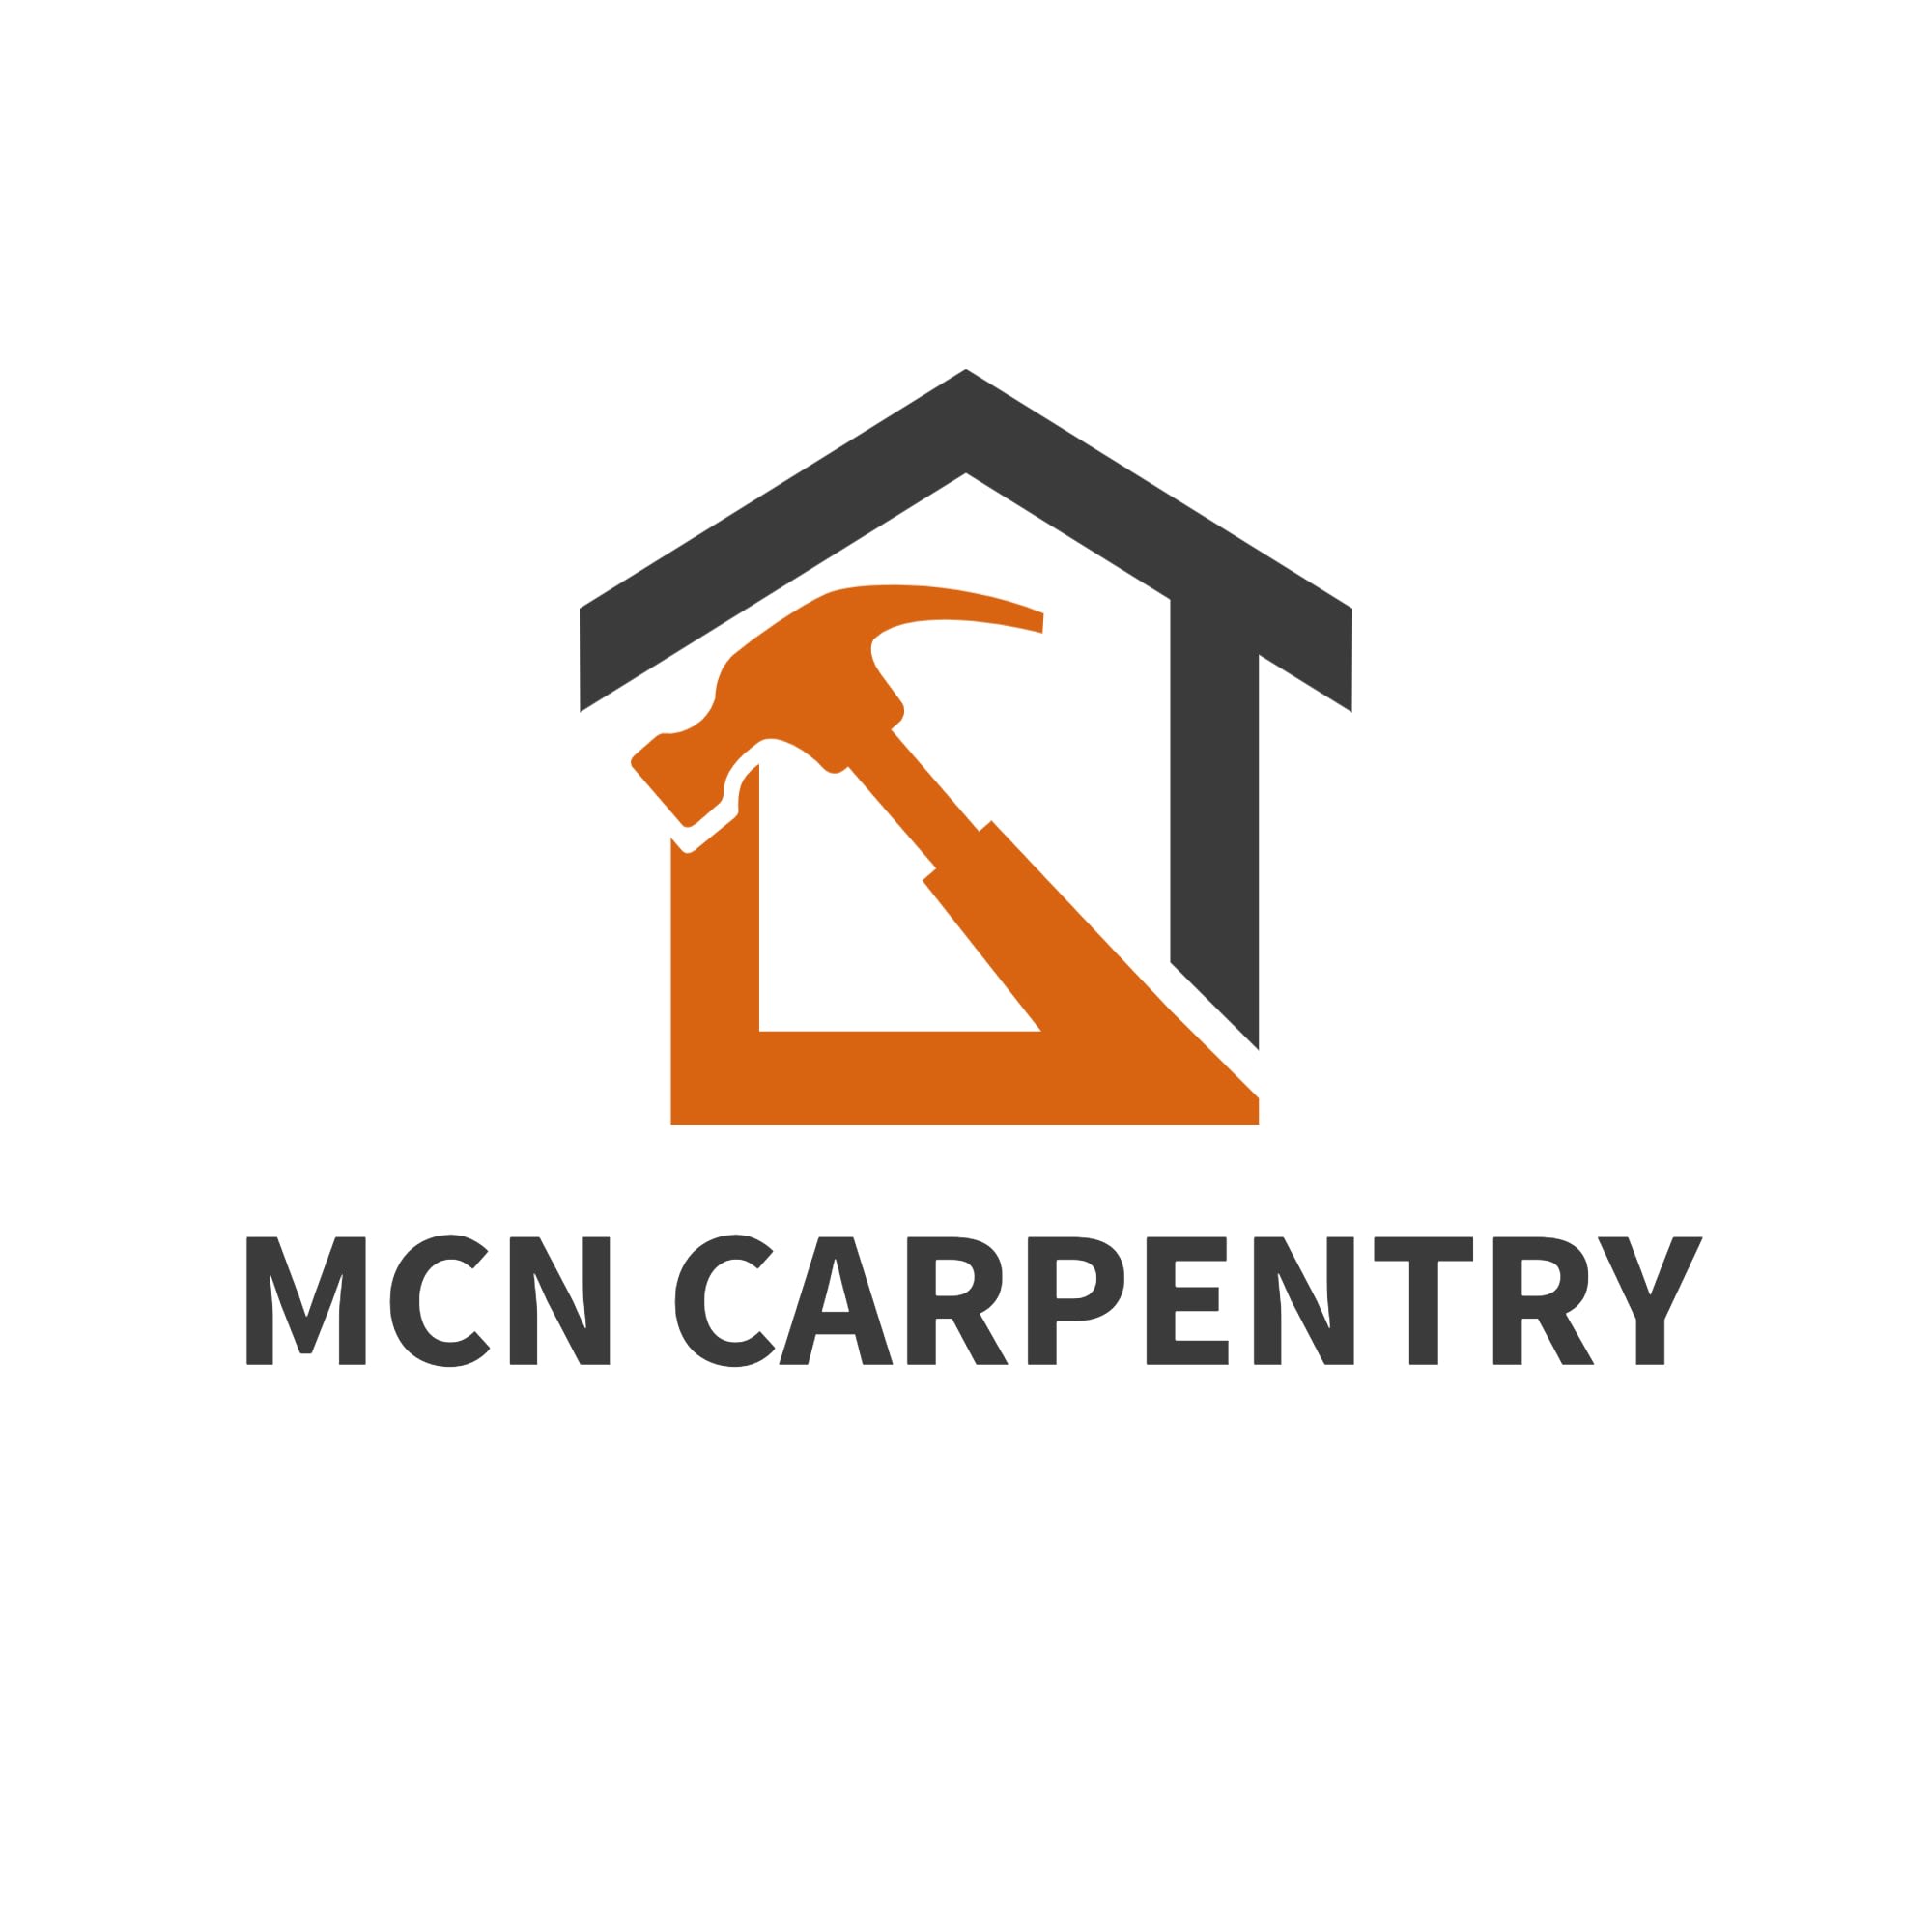 MCN Carpentry